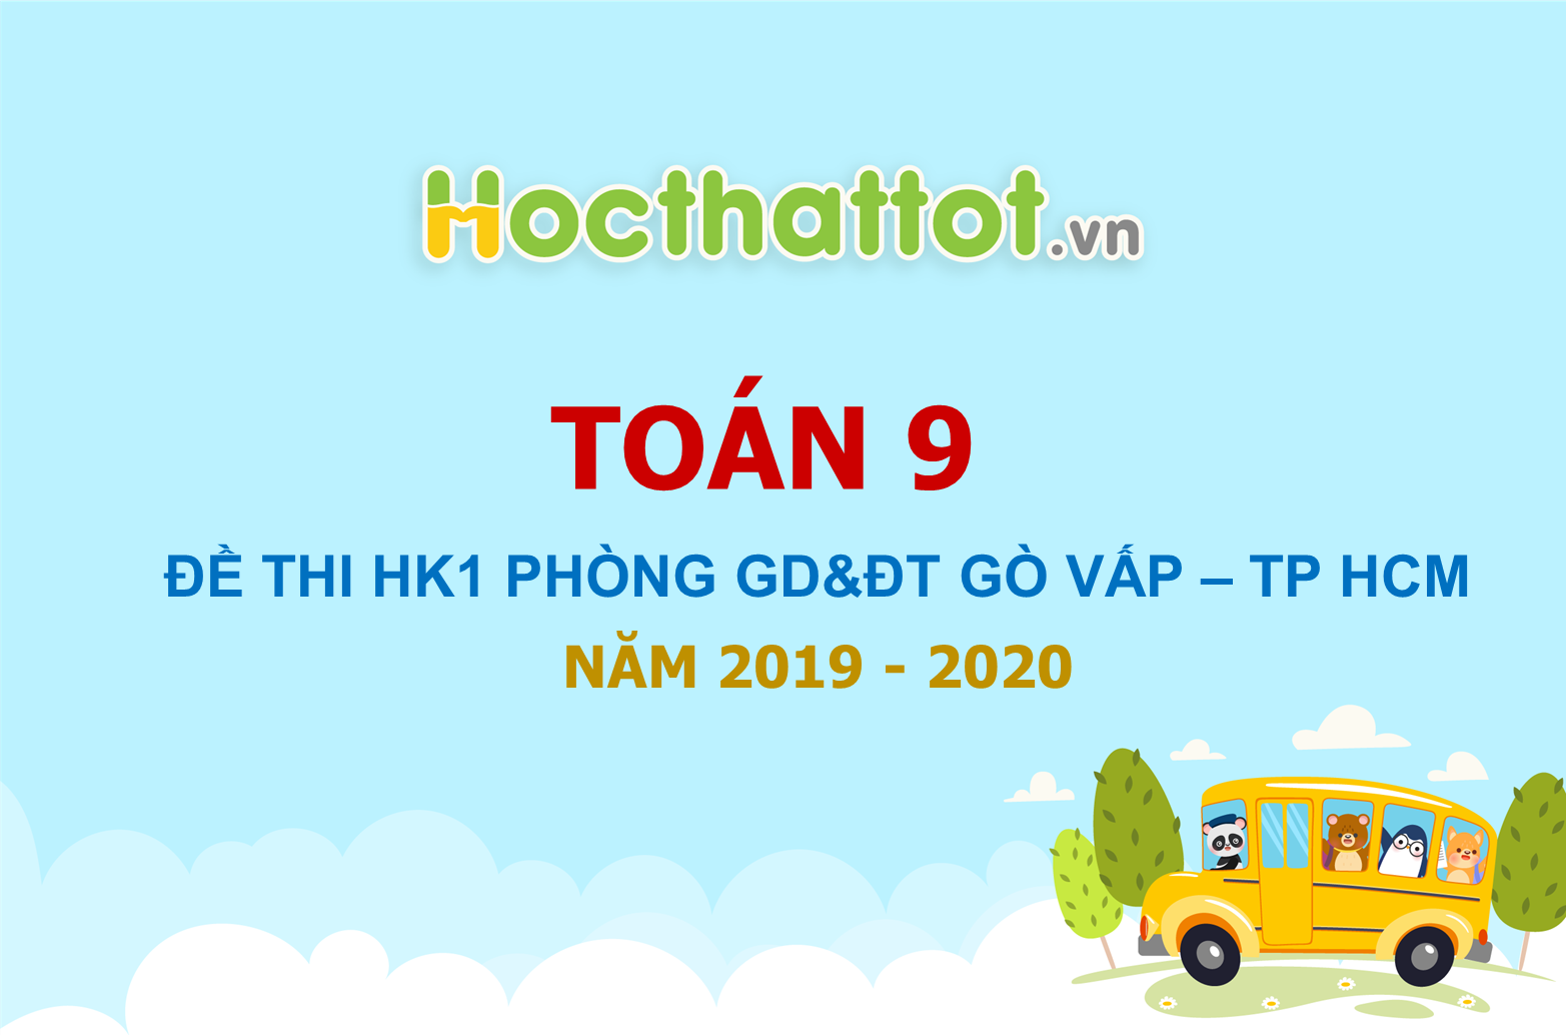 de-thi-hk1-toan-9-nam-2019-2020-phong-gddt-go-vap-tp-hcm.pdf